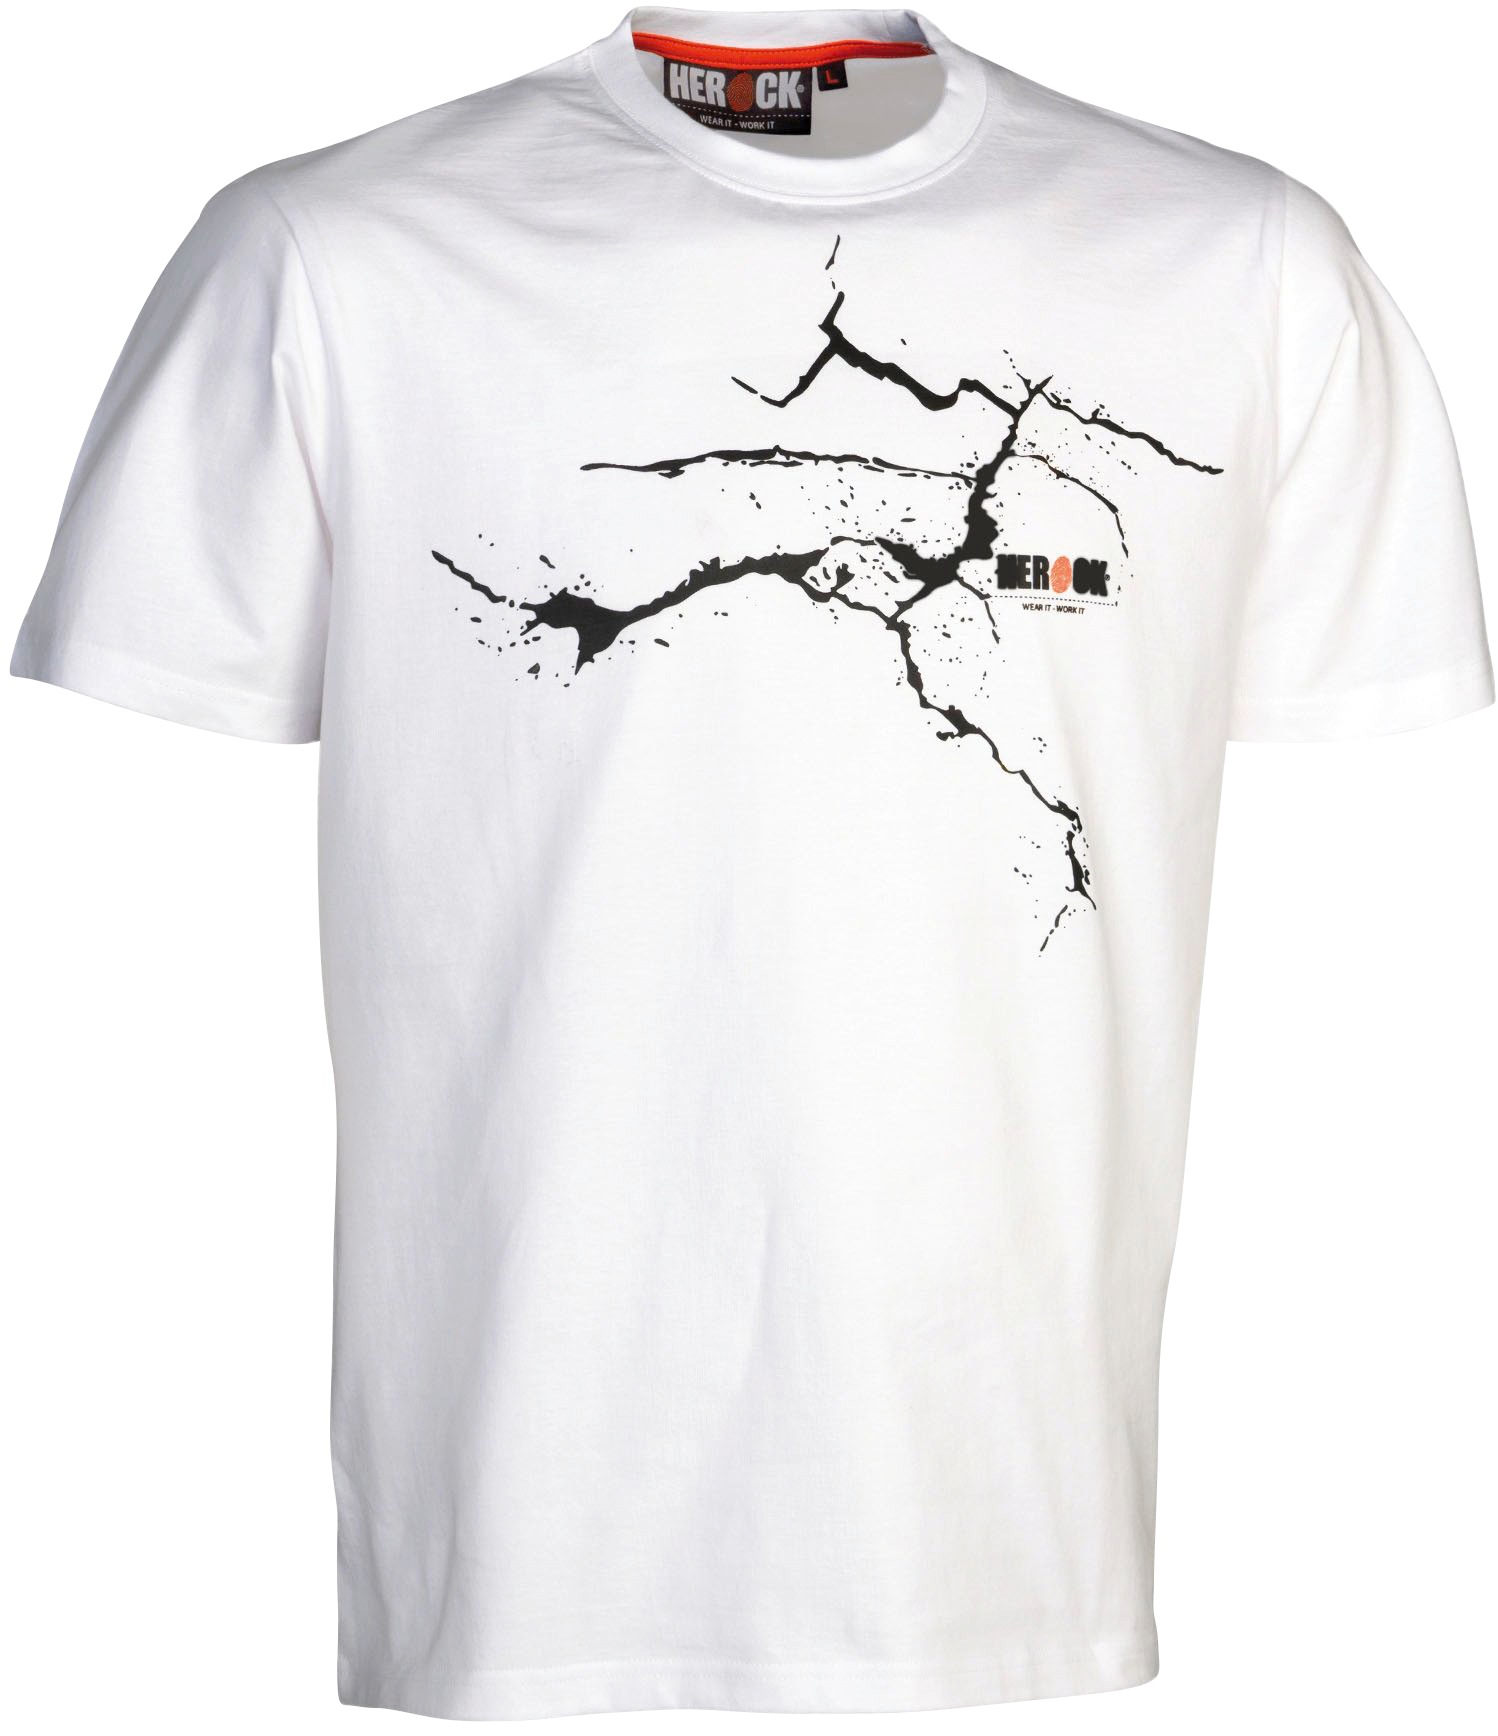 »Burst«, kurzen | Herock®- online bestellen BAUR Aufdruck T-Shirt Mit Ärmeln, Rundhalsausschnitt, Herock